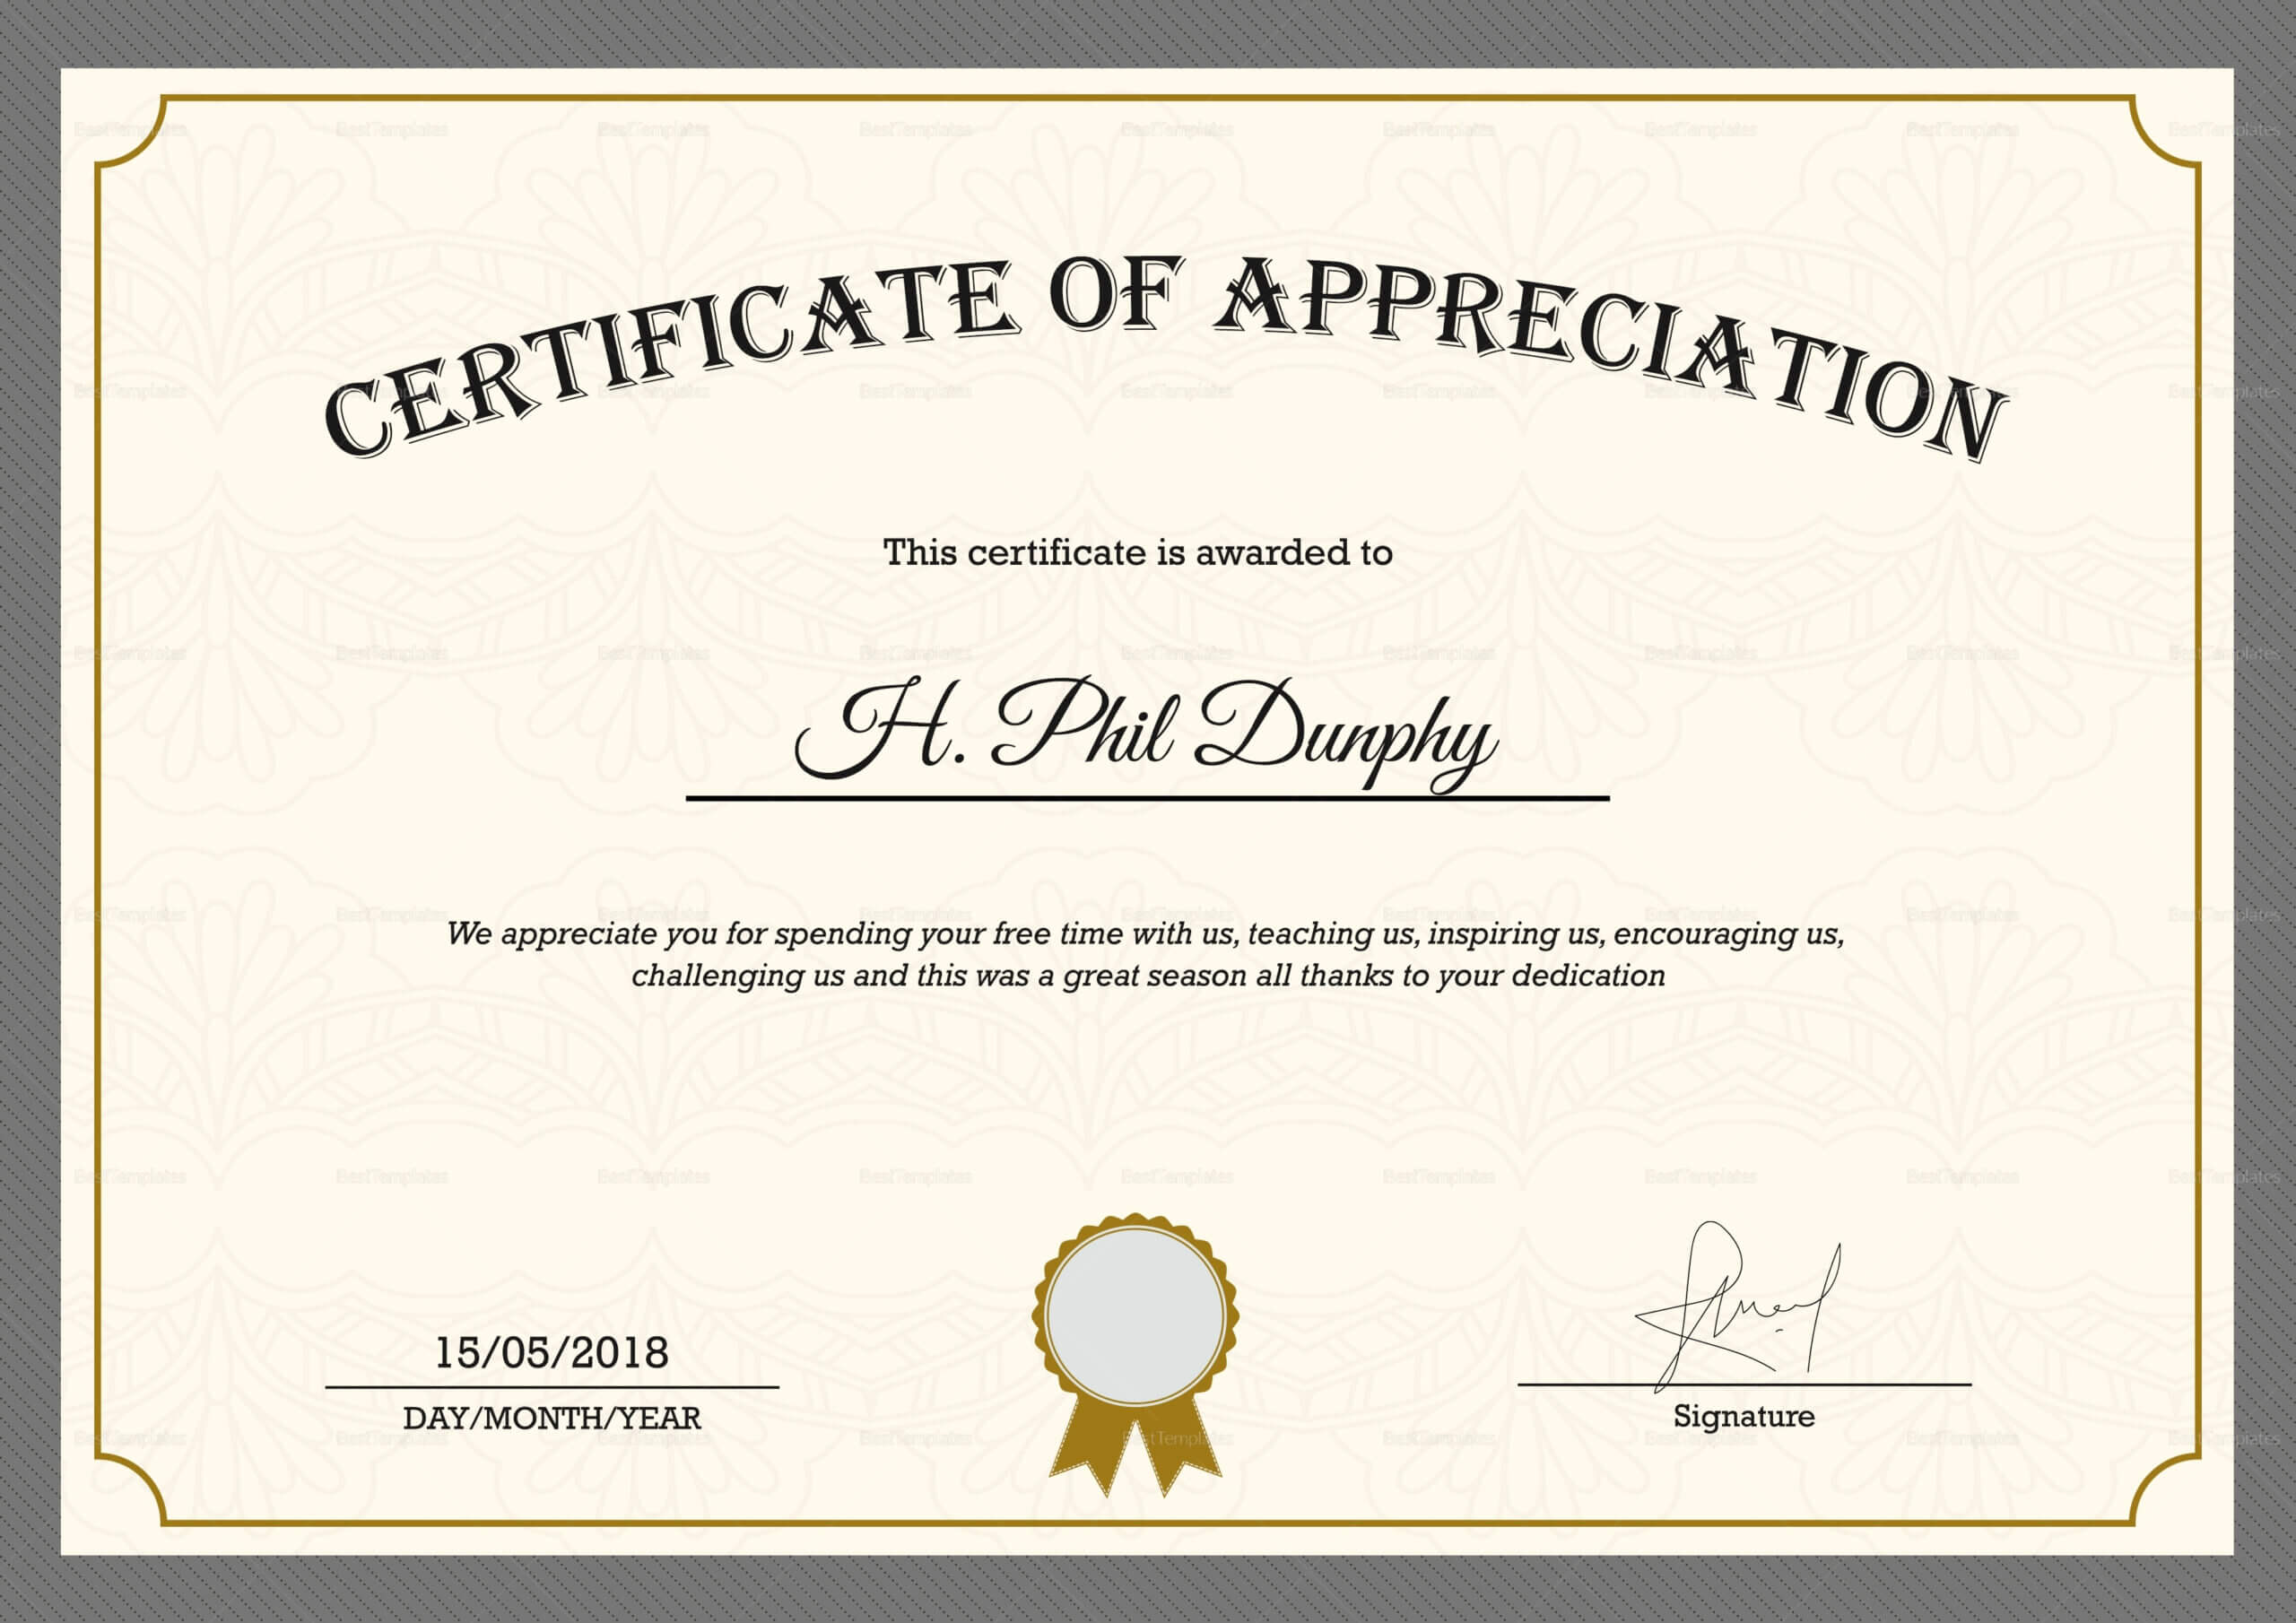 Sample Company Appreciation Certificate Template Within In In Appreciation Certificate Templates